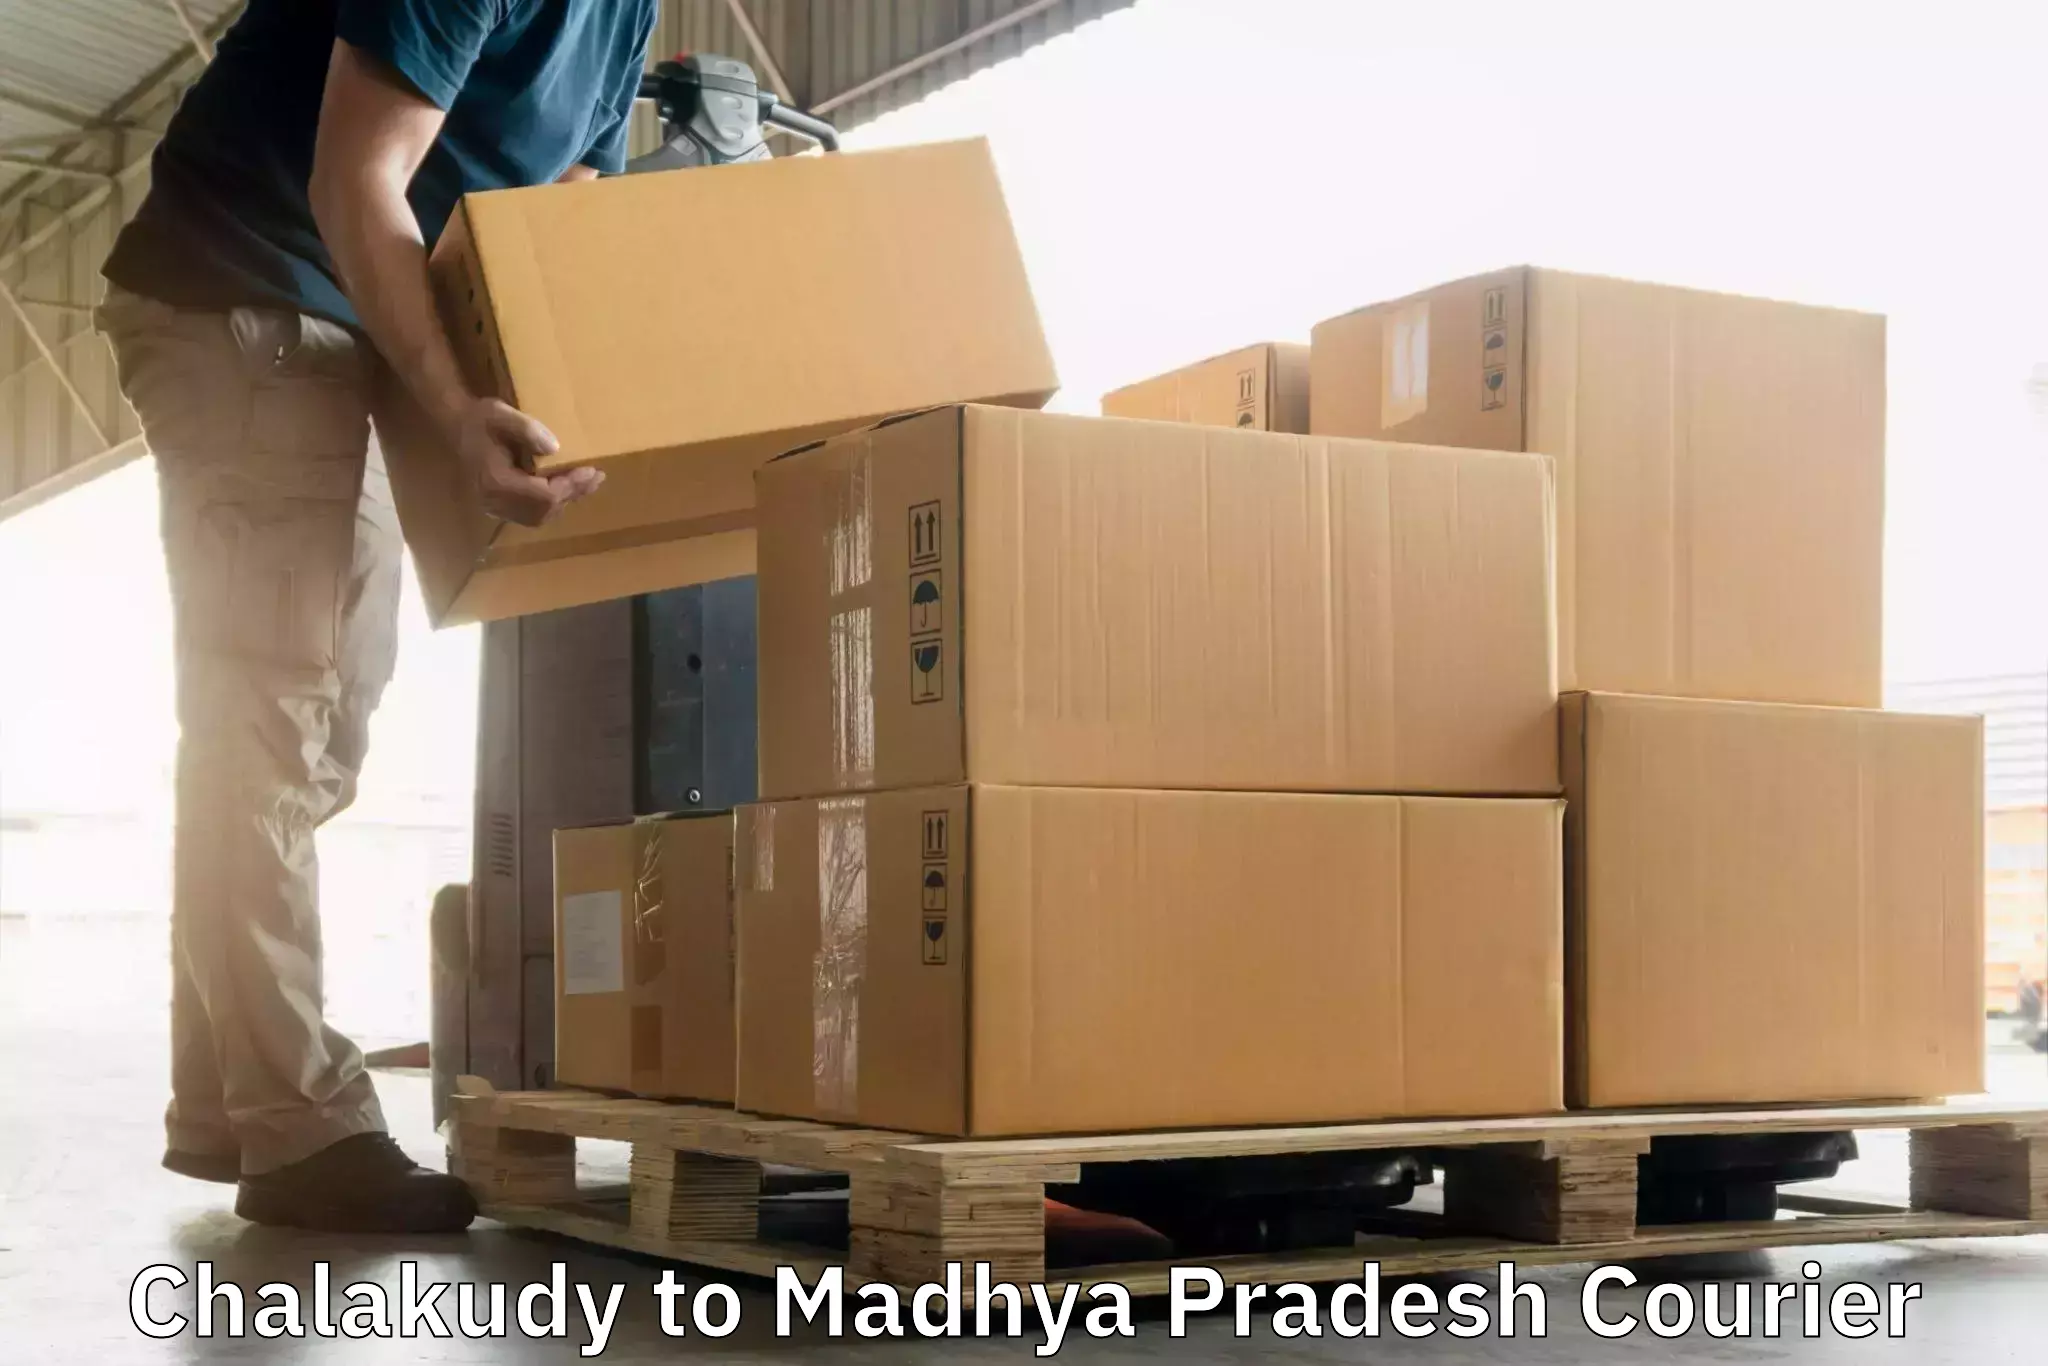 Courier service comparison Chalakudy to Shivpuri